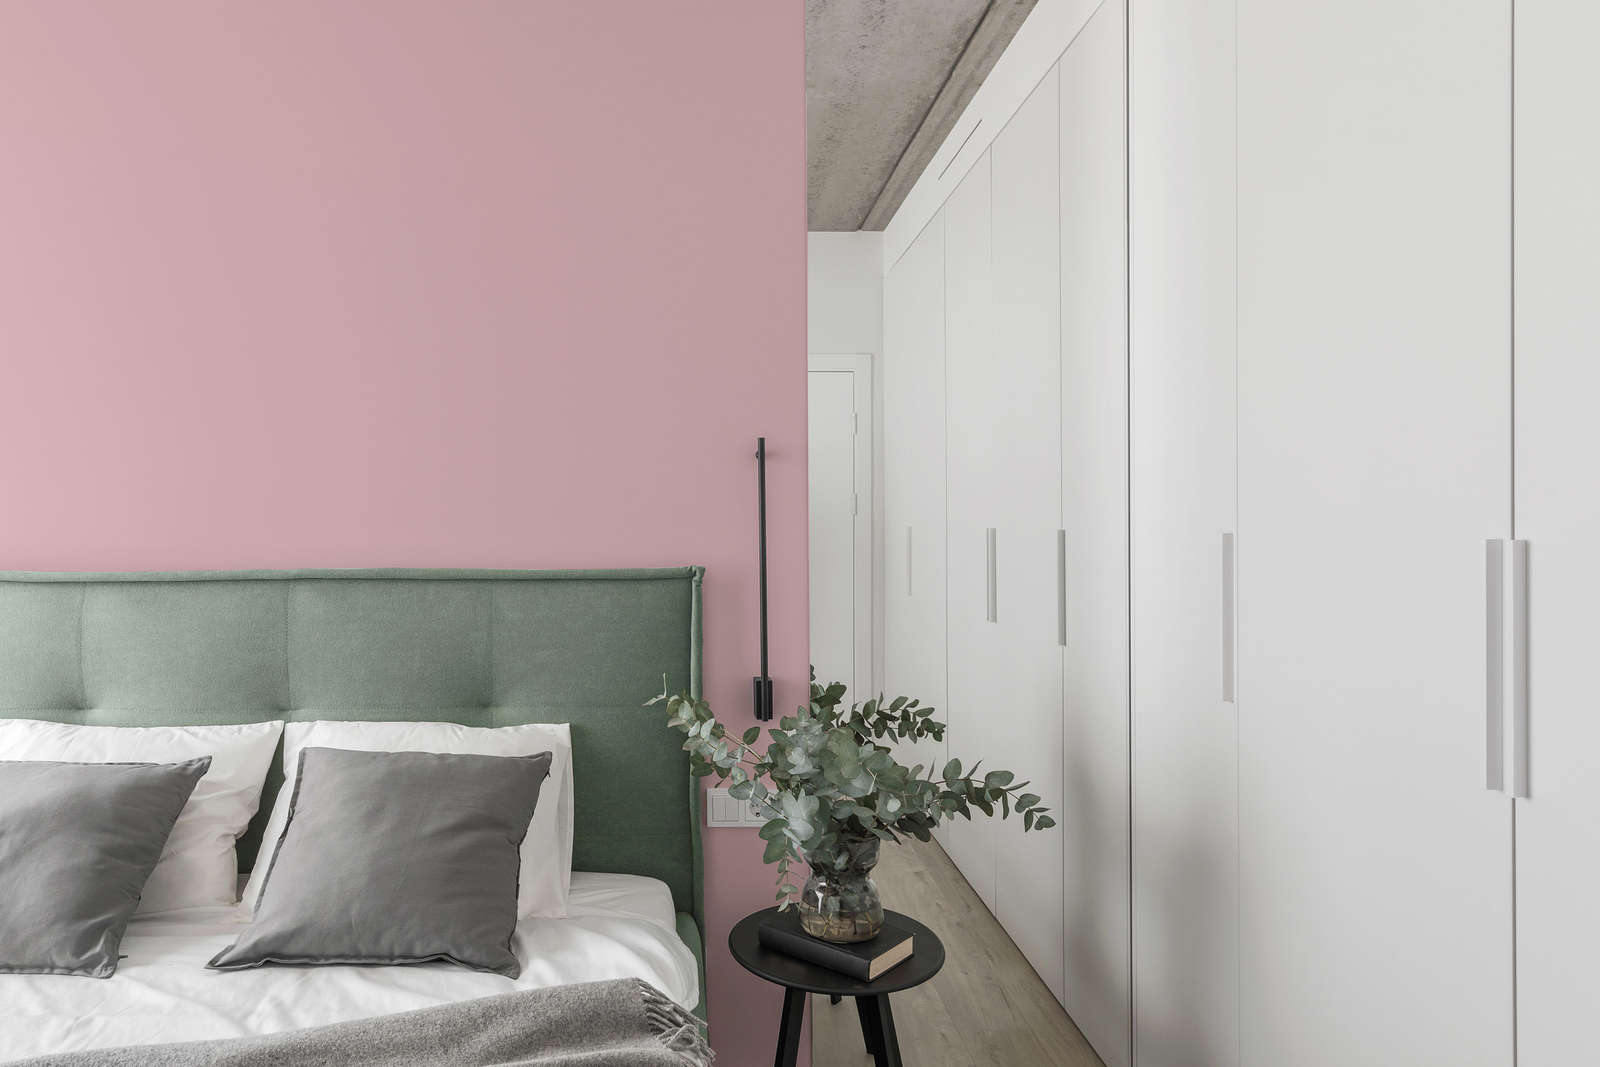             Pittura murale Premium rosa tenue »Blooming Blossom« NW1016 – 2,5 litri
        